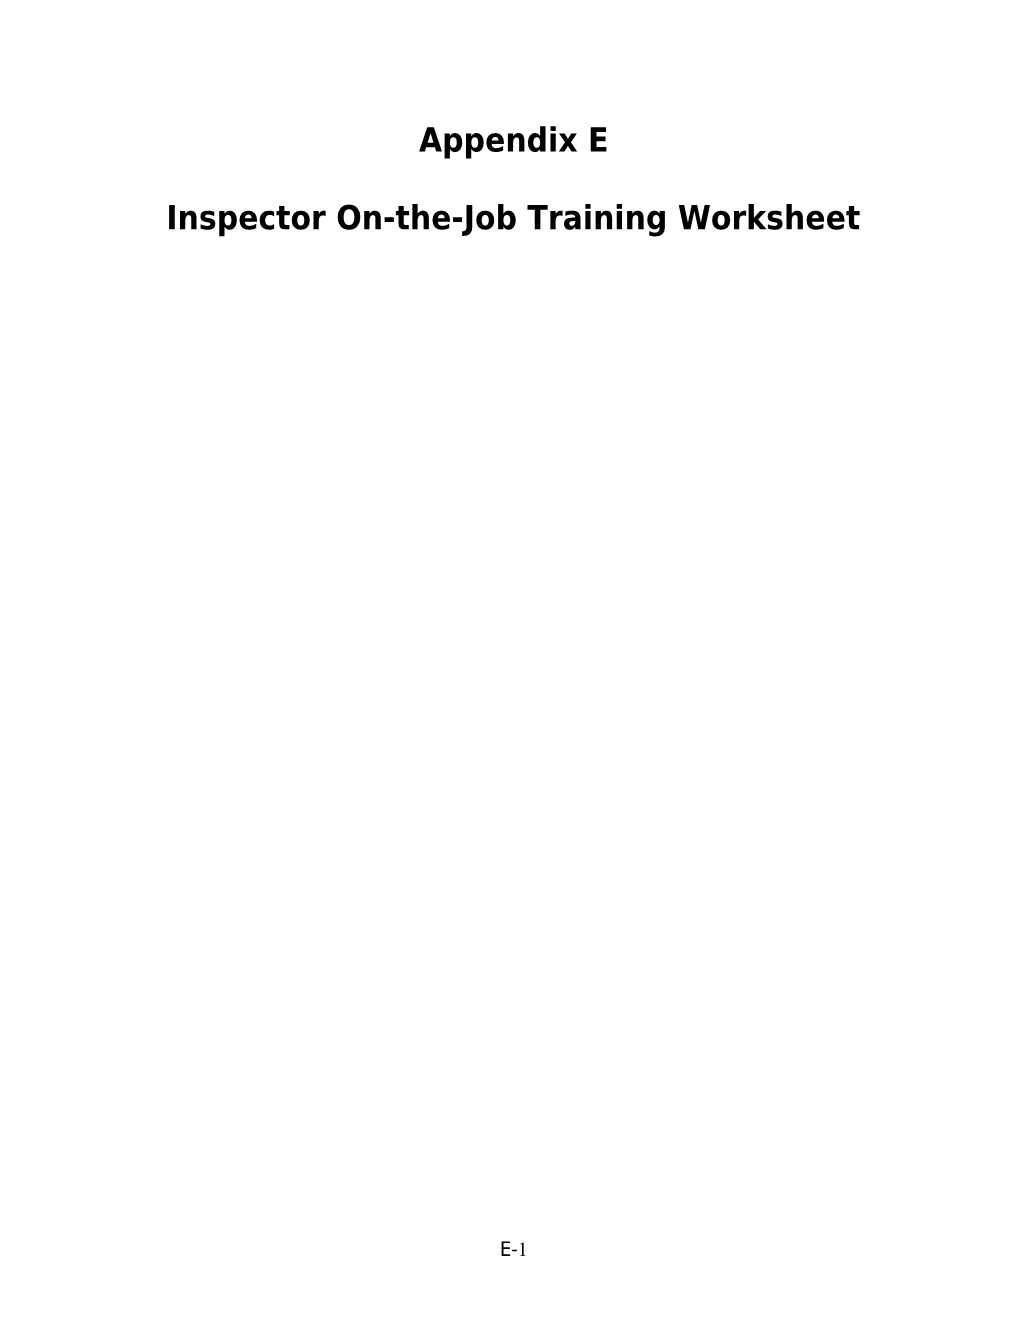 Appendix E - Inspector On-The-Job Training Worksheets